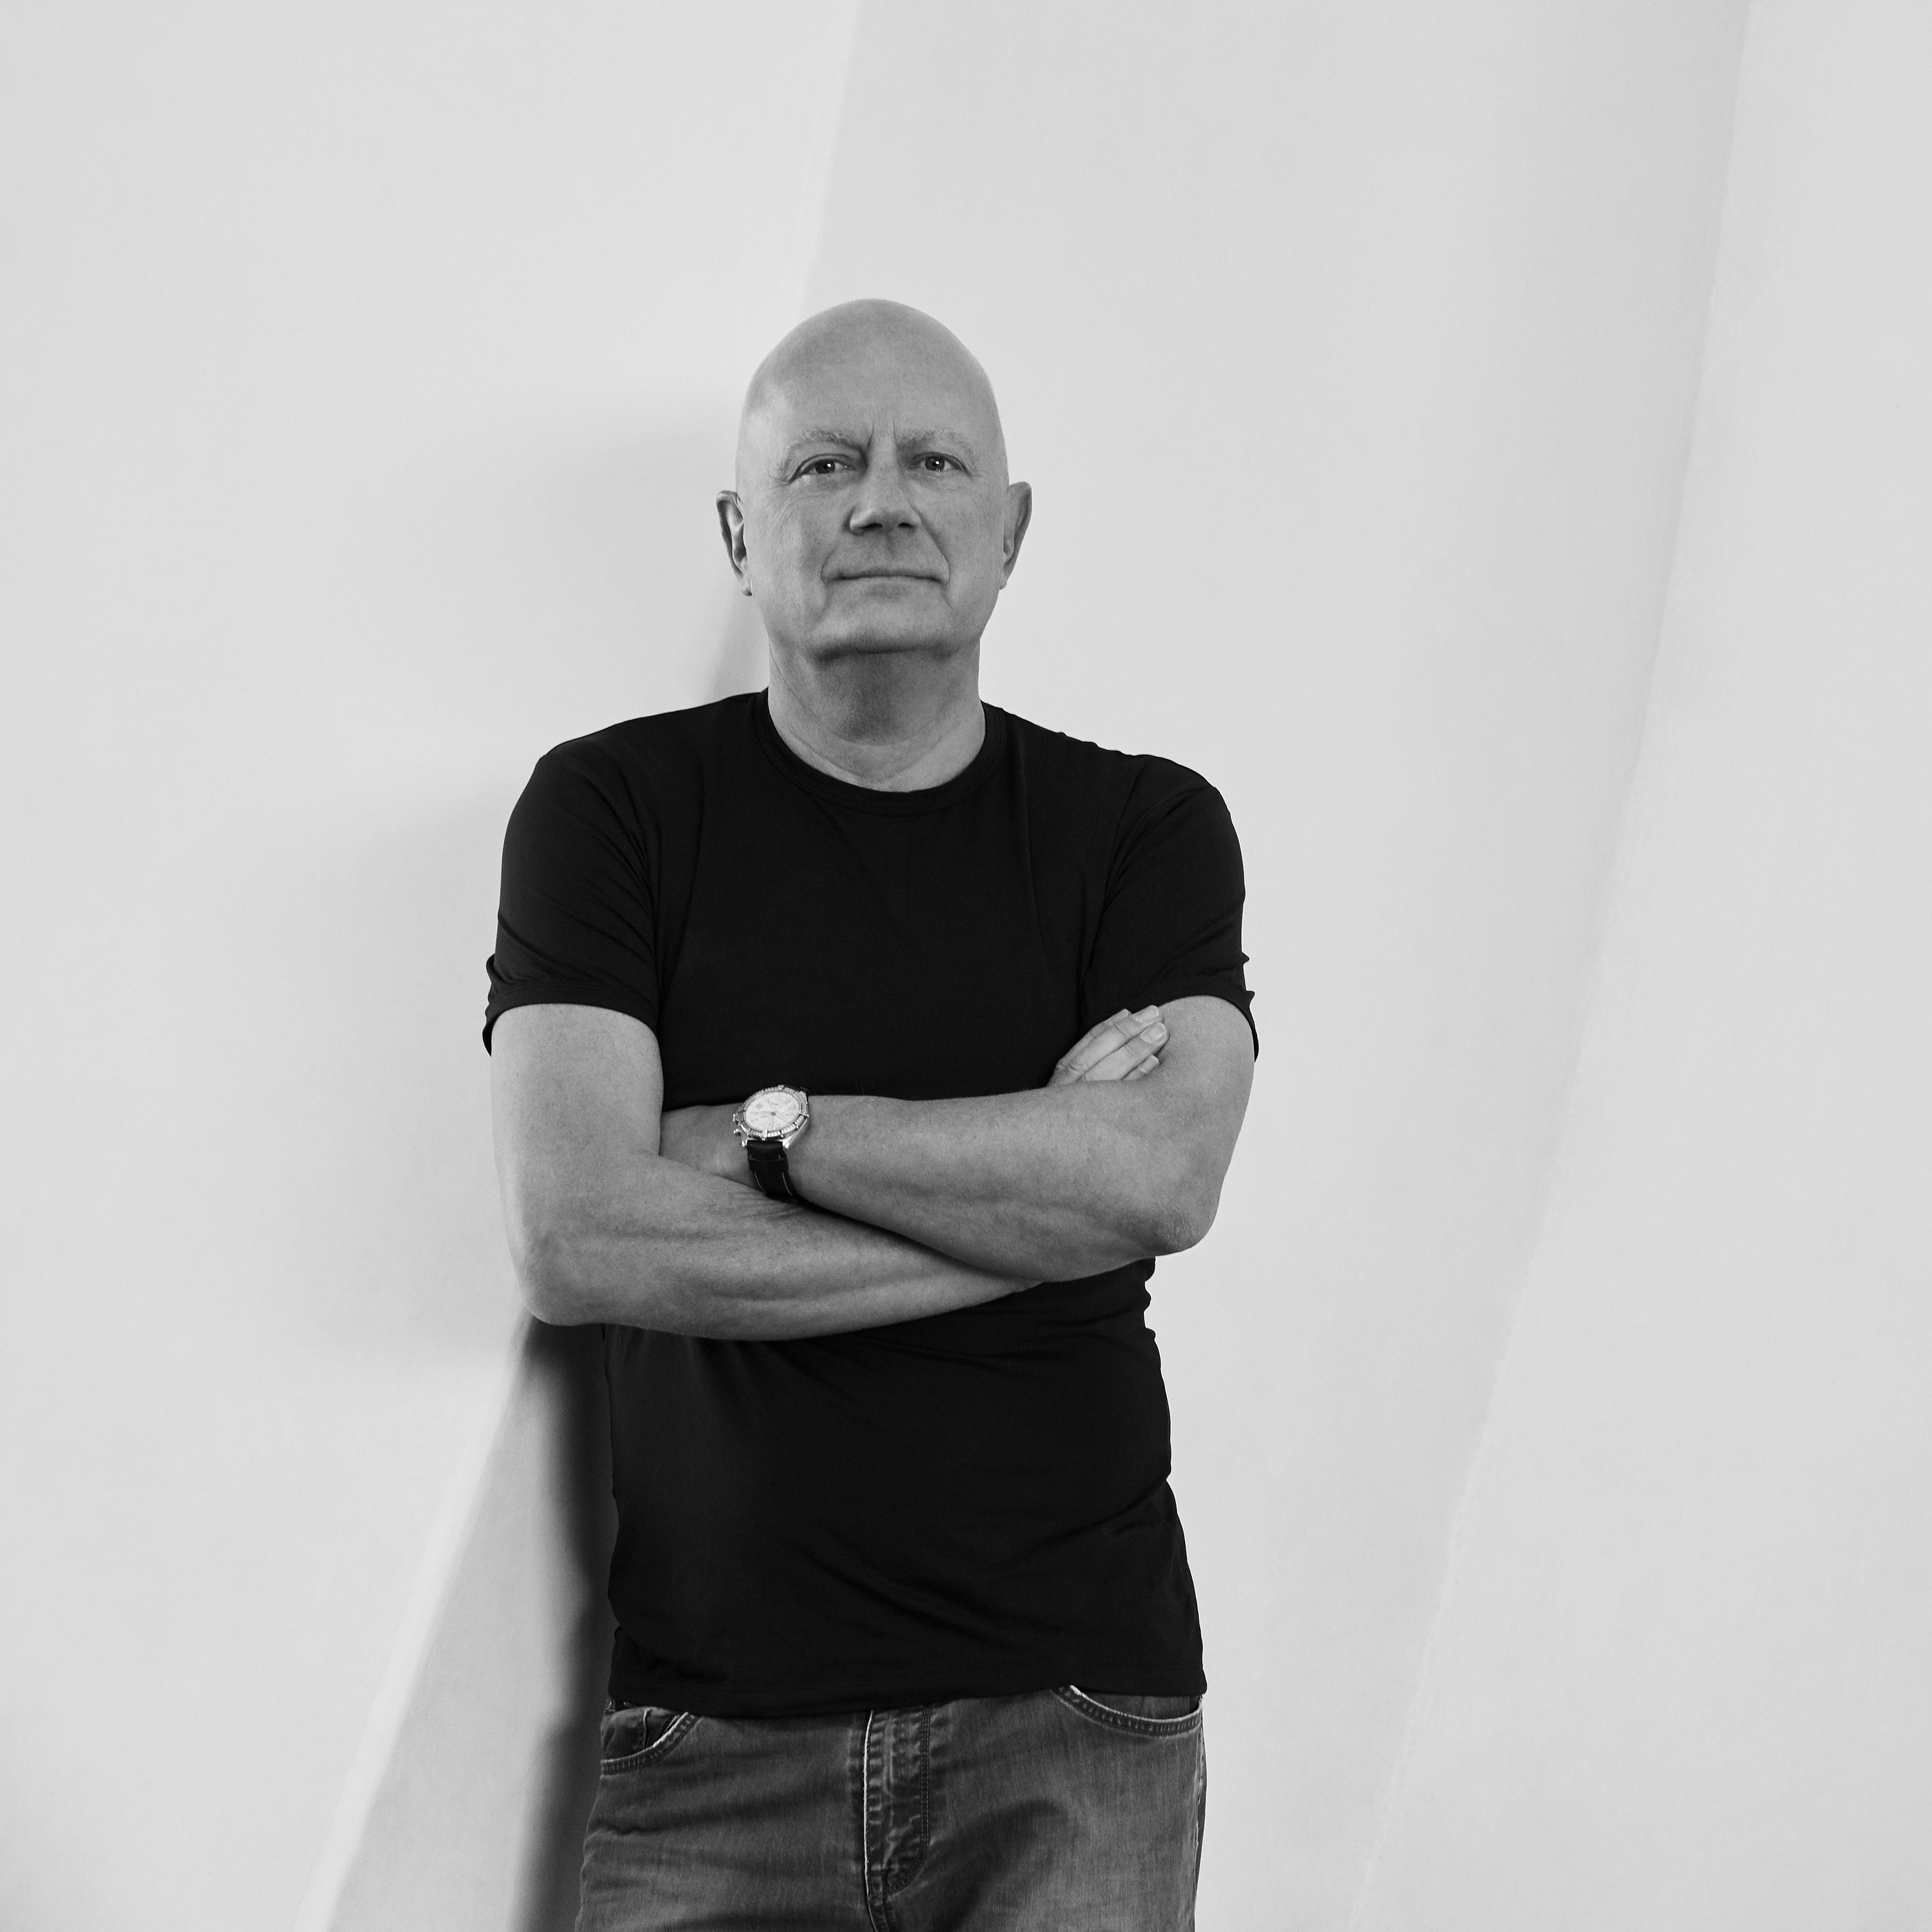 Designer Morten Georgsen in black and white